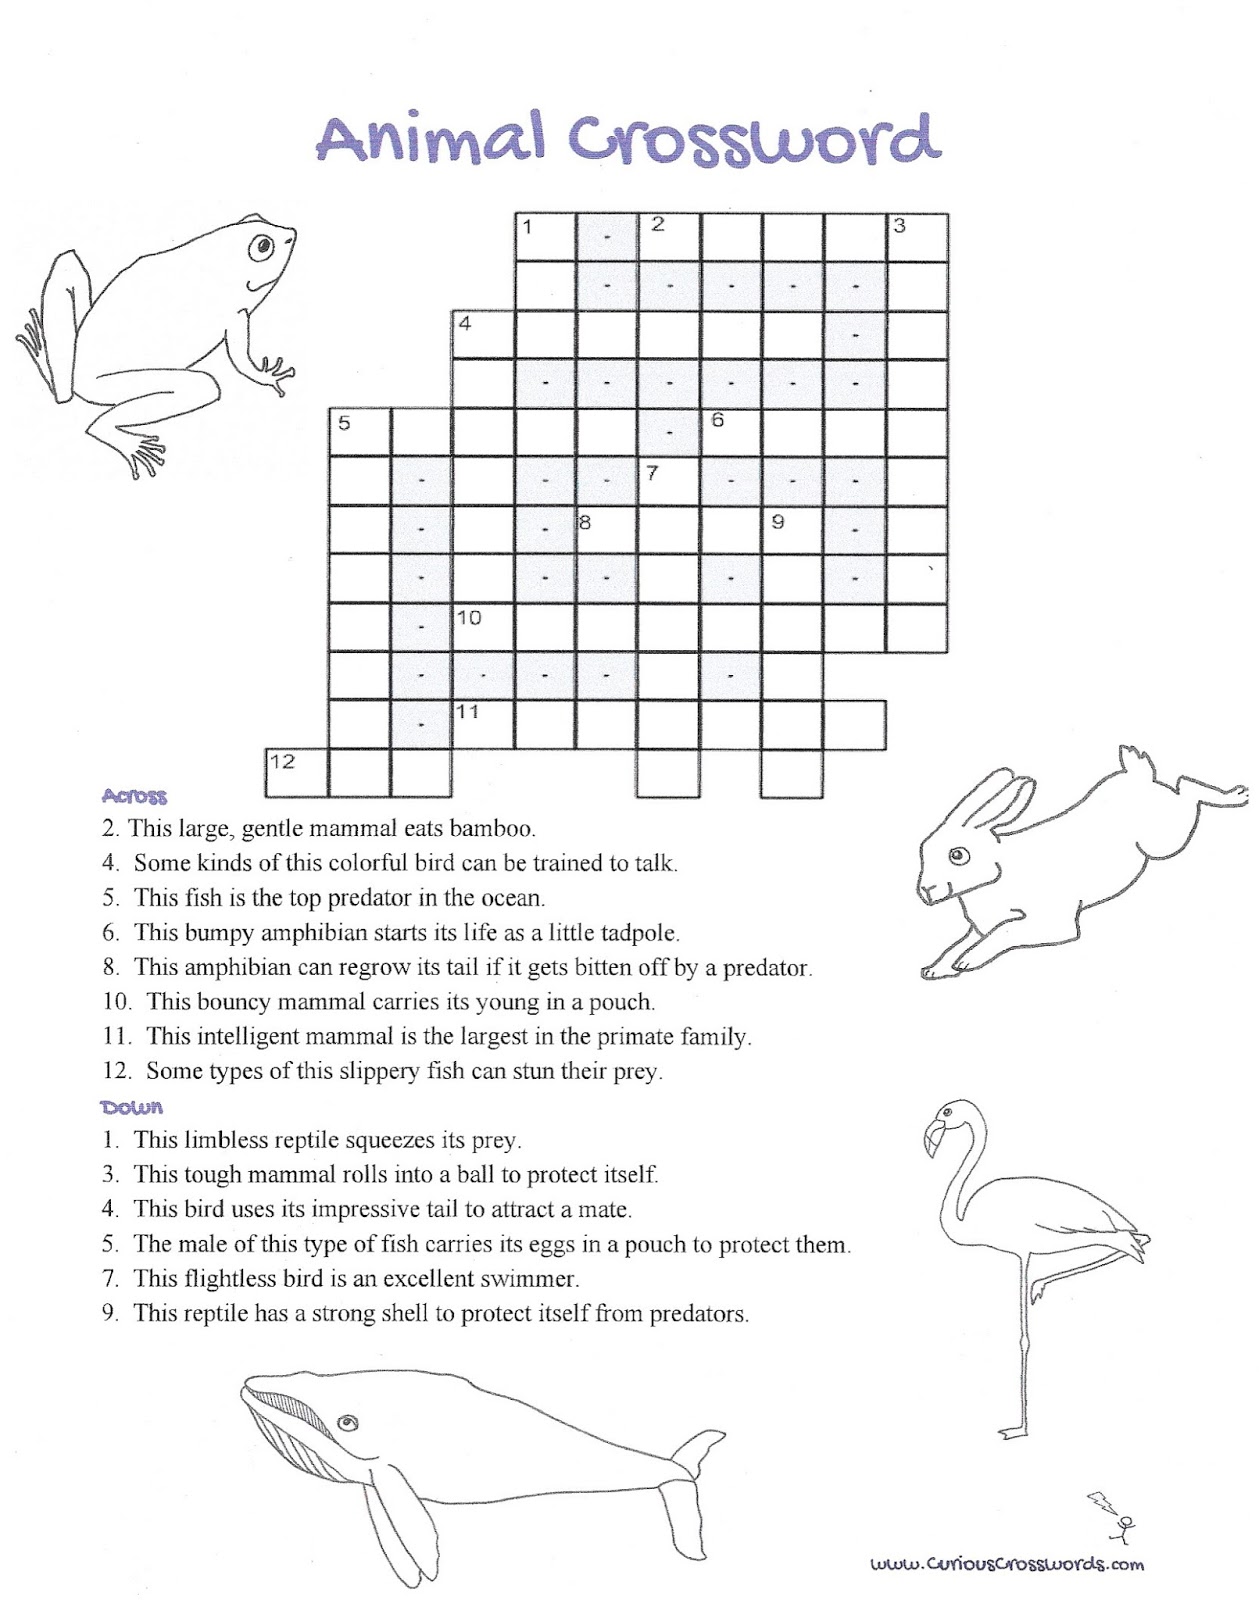 curious-crosswords-animal-crossword